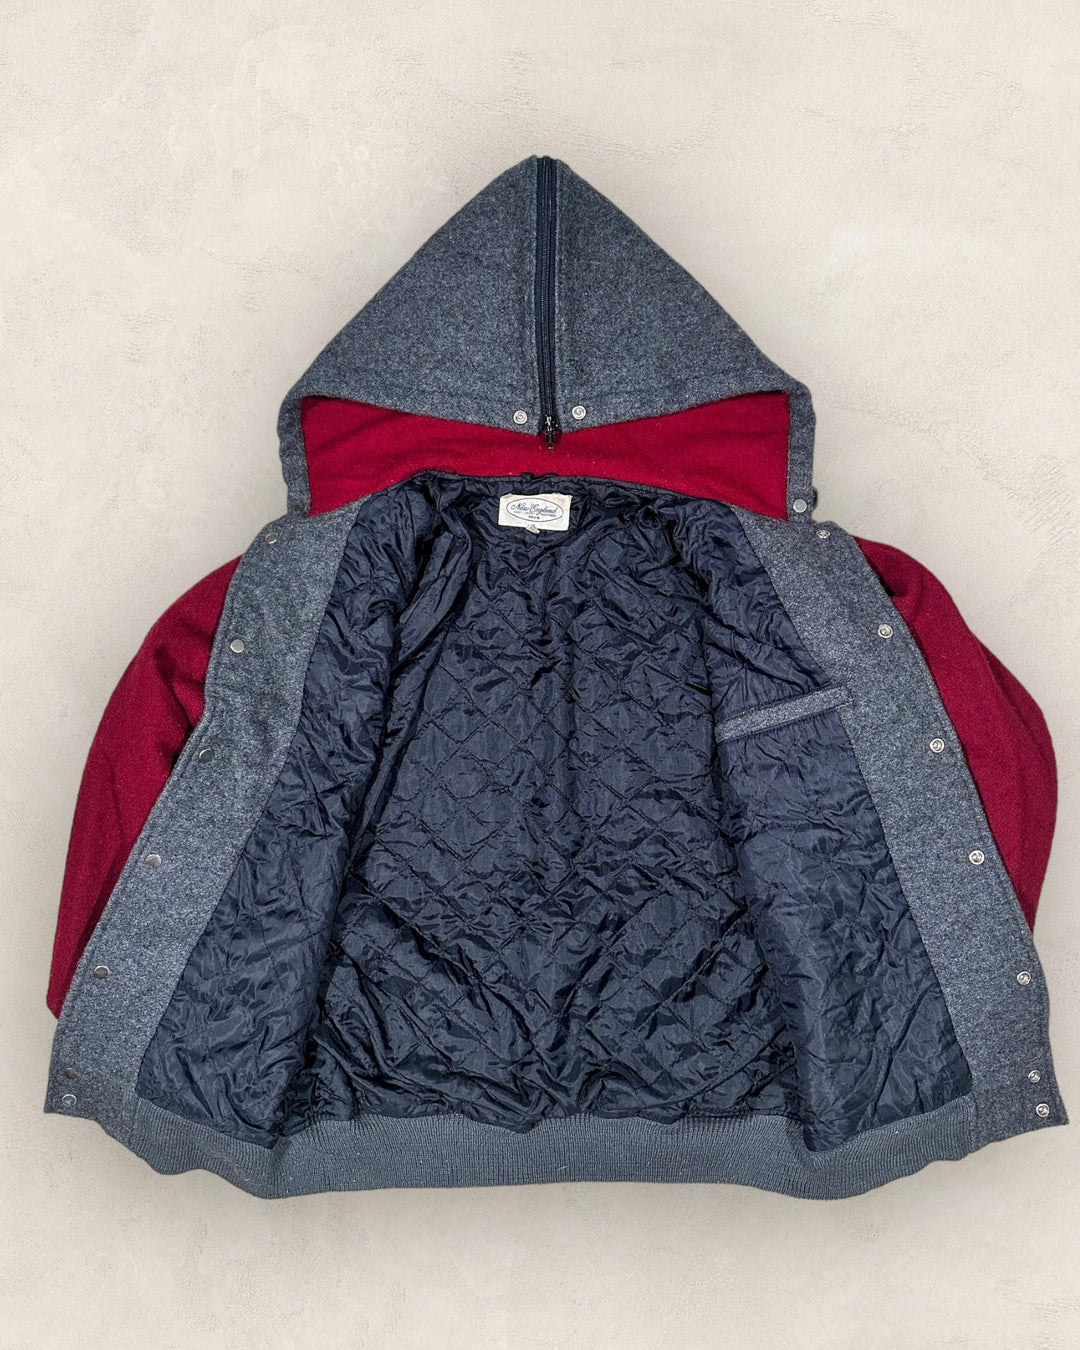 Varsity jacket New England - Size XS/S